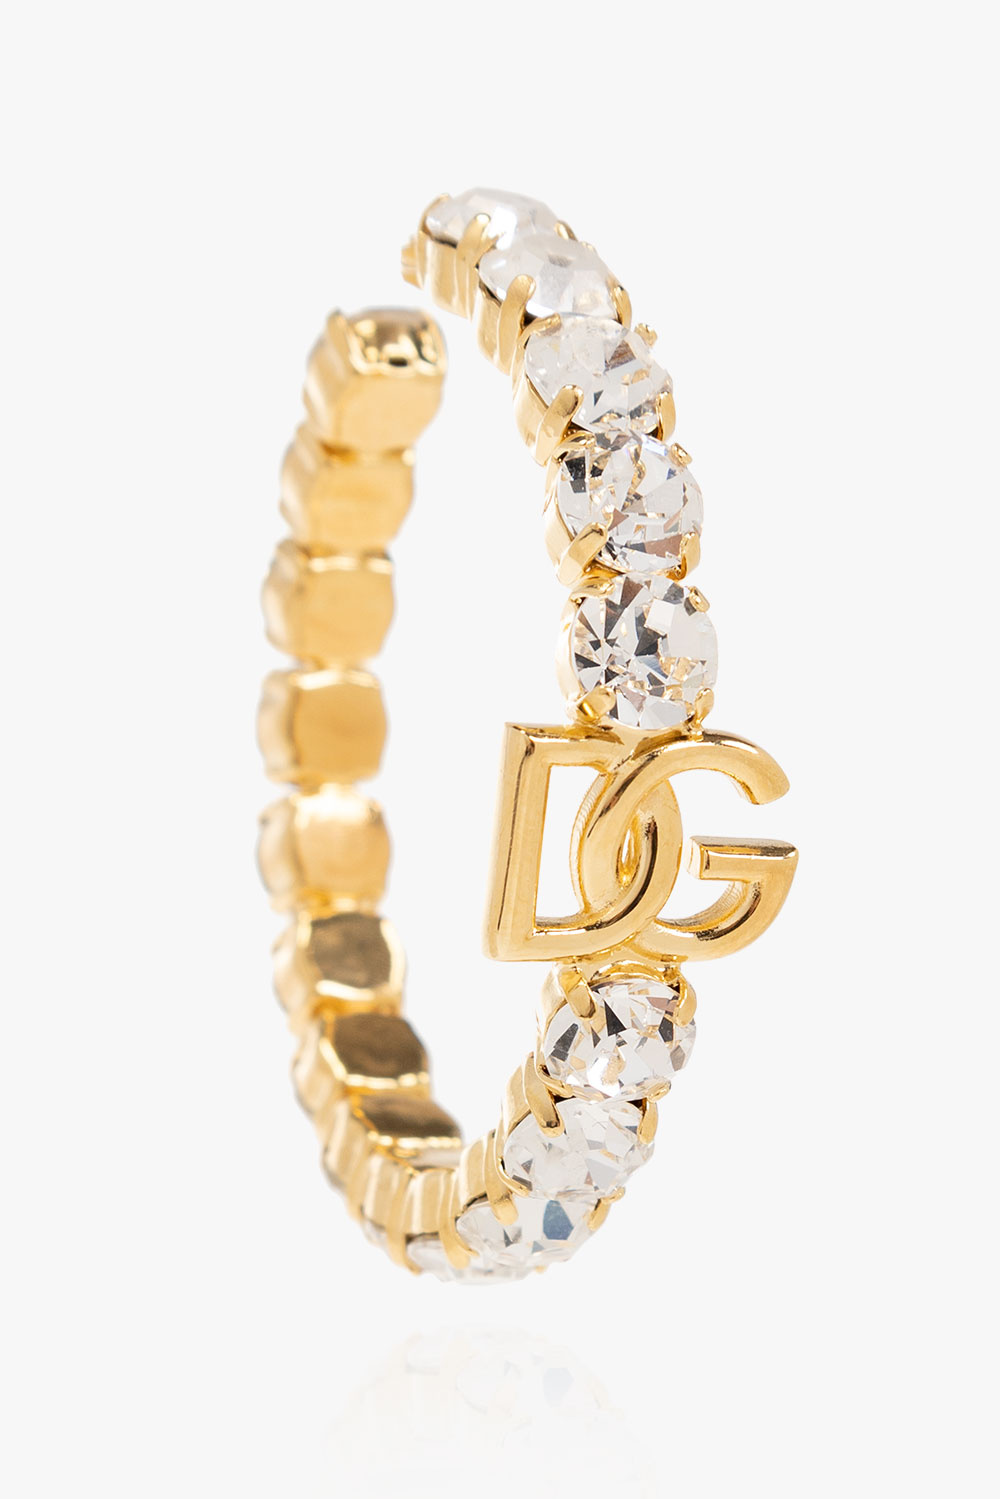 Dolce & Gabbana Brass earrings with Gerade